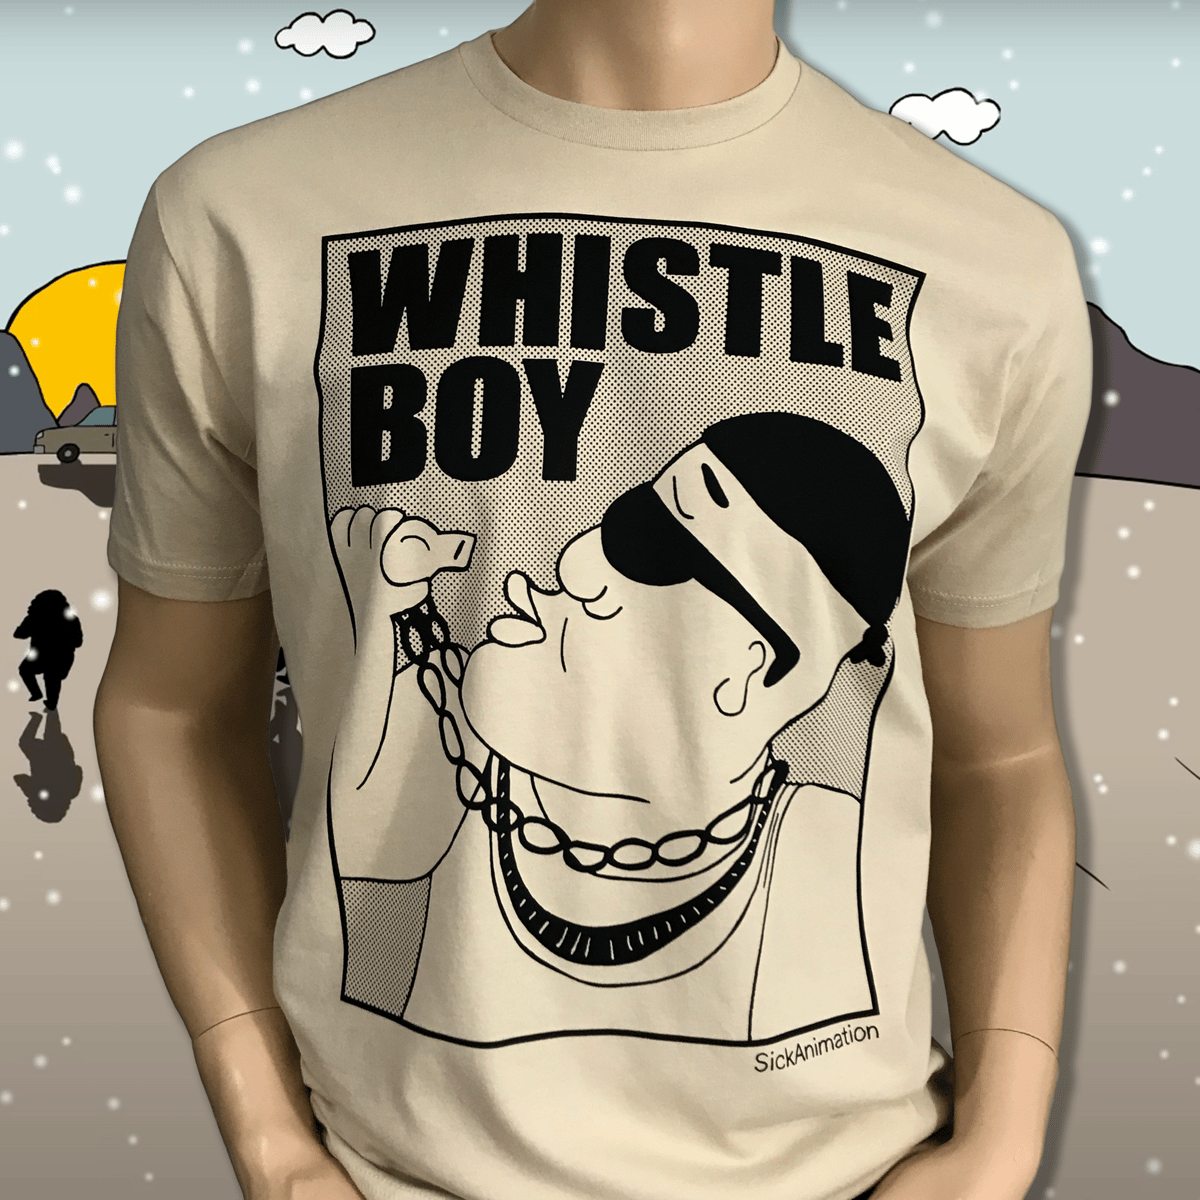 Hold op Start Skraldespand Whistle Boy shirt TAN - Sick Animation Shop